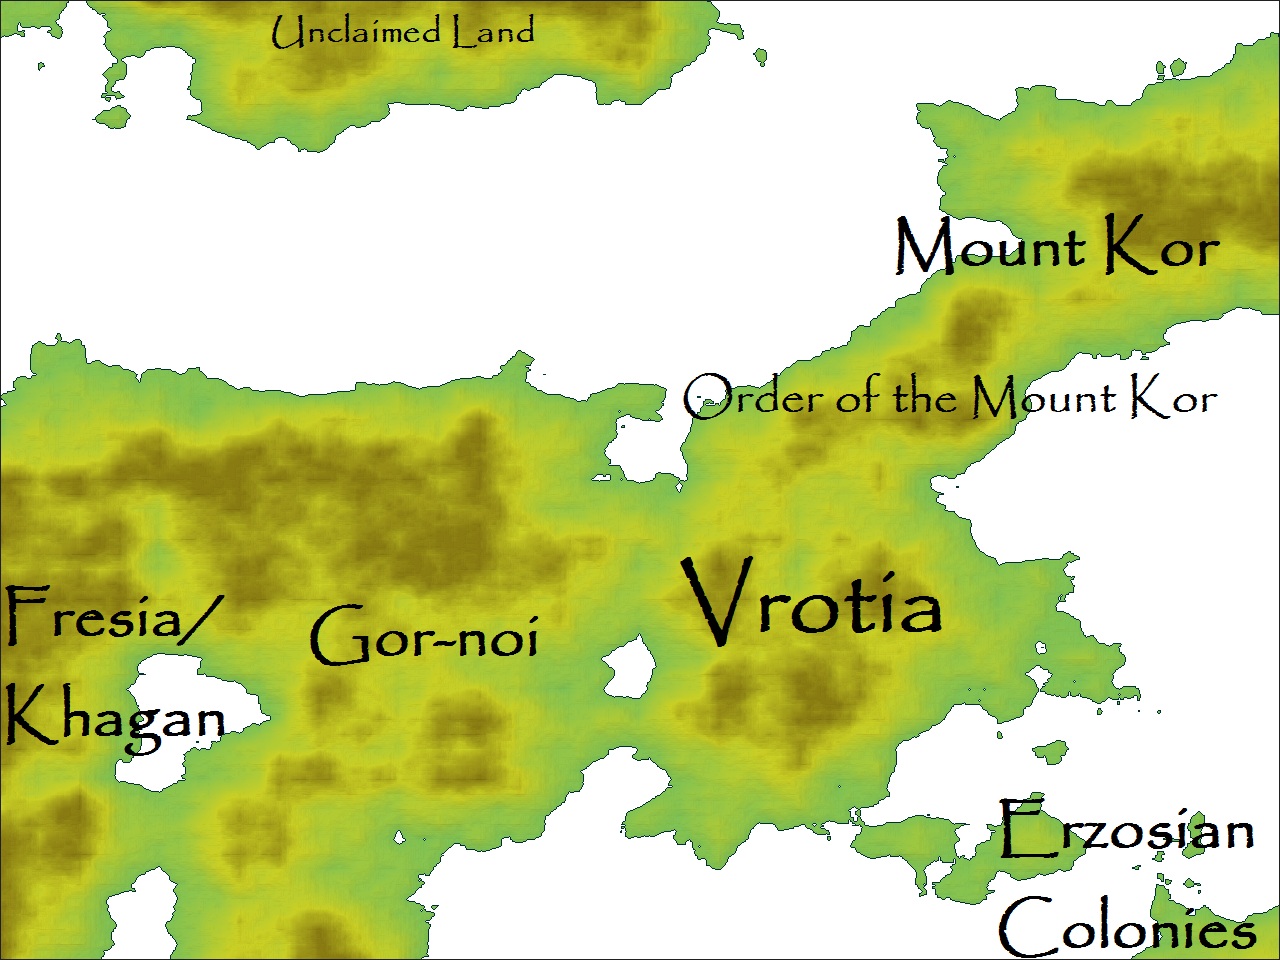 Regions Map